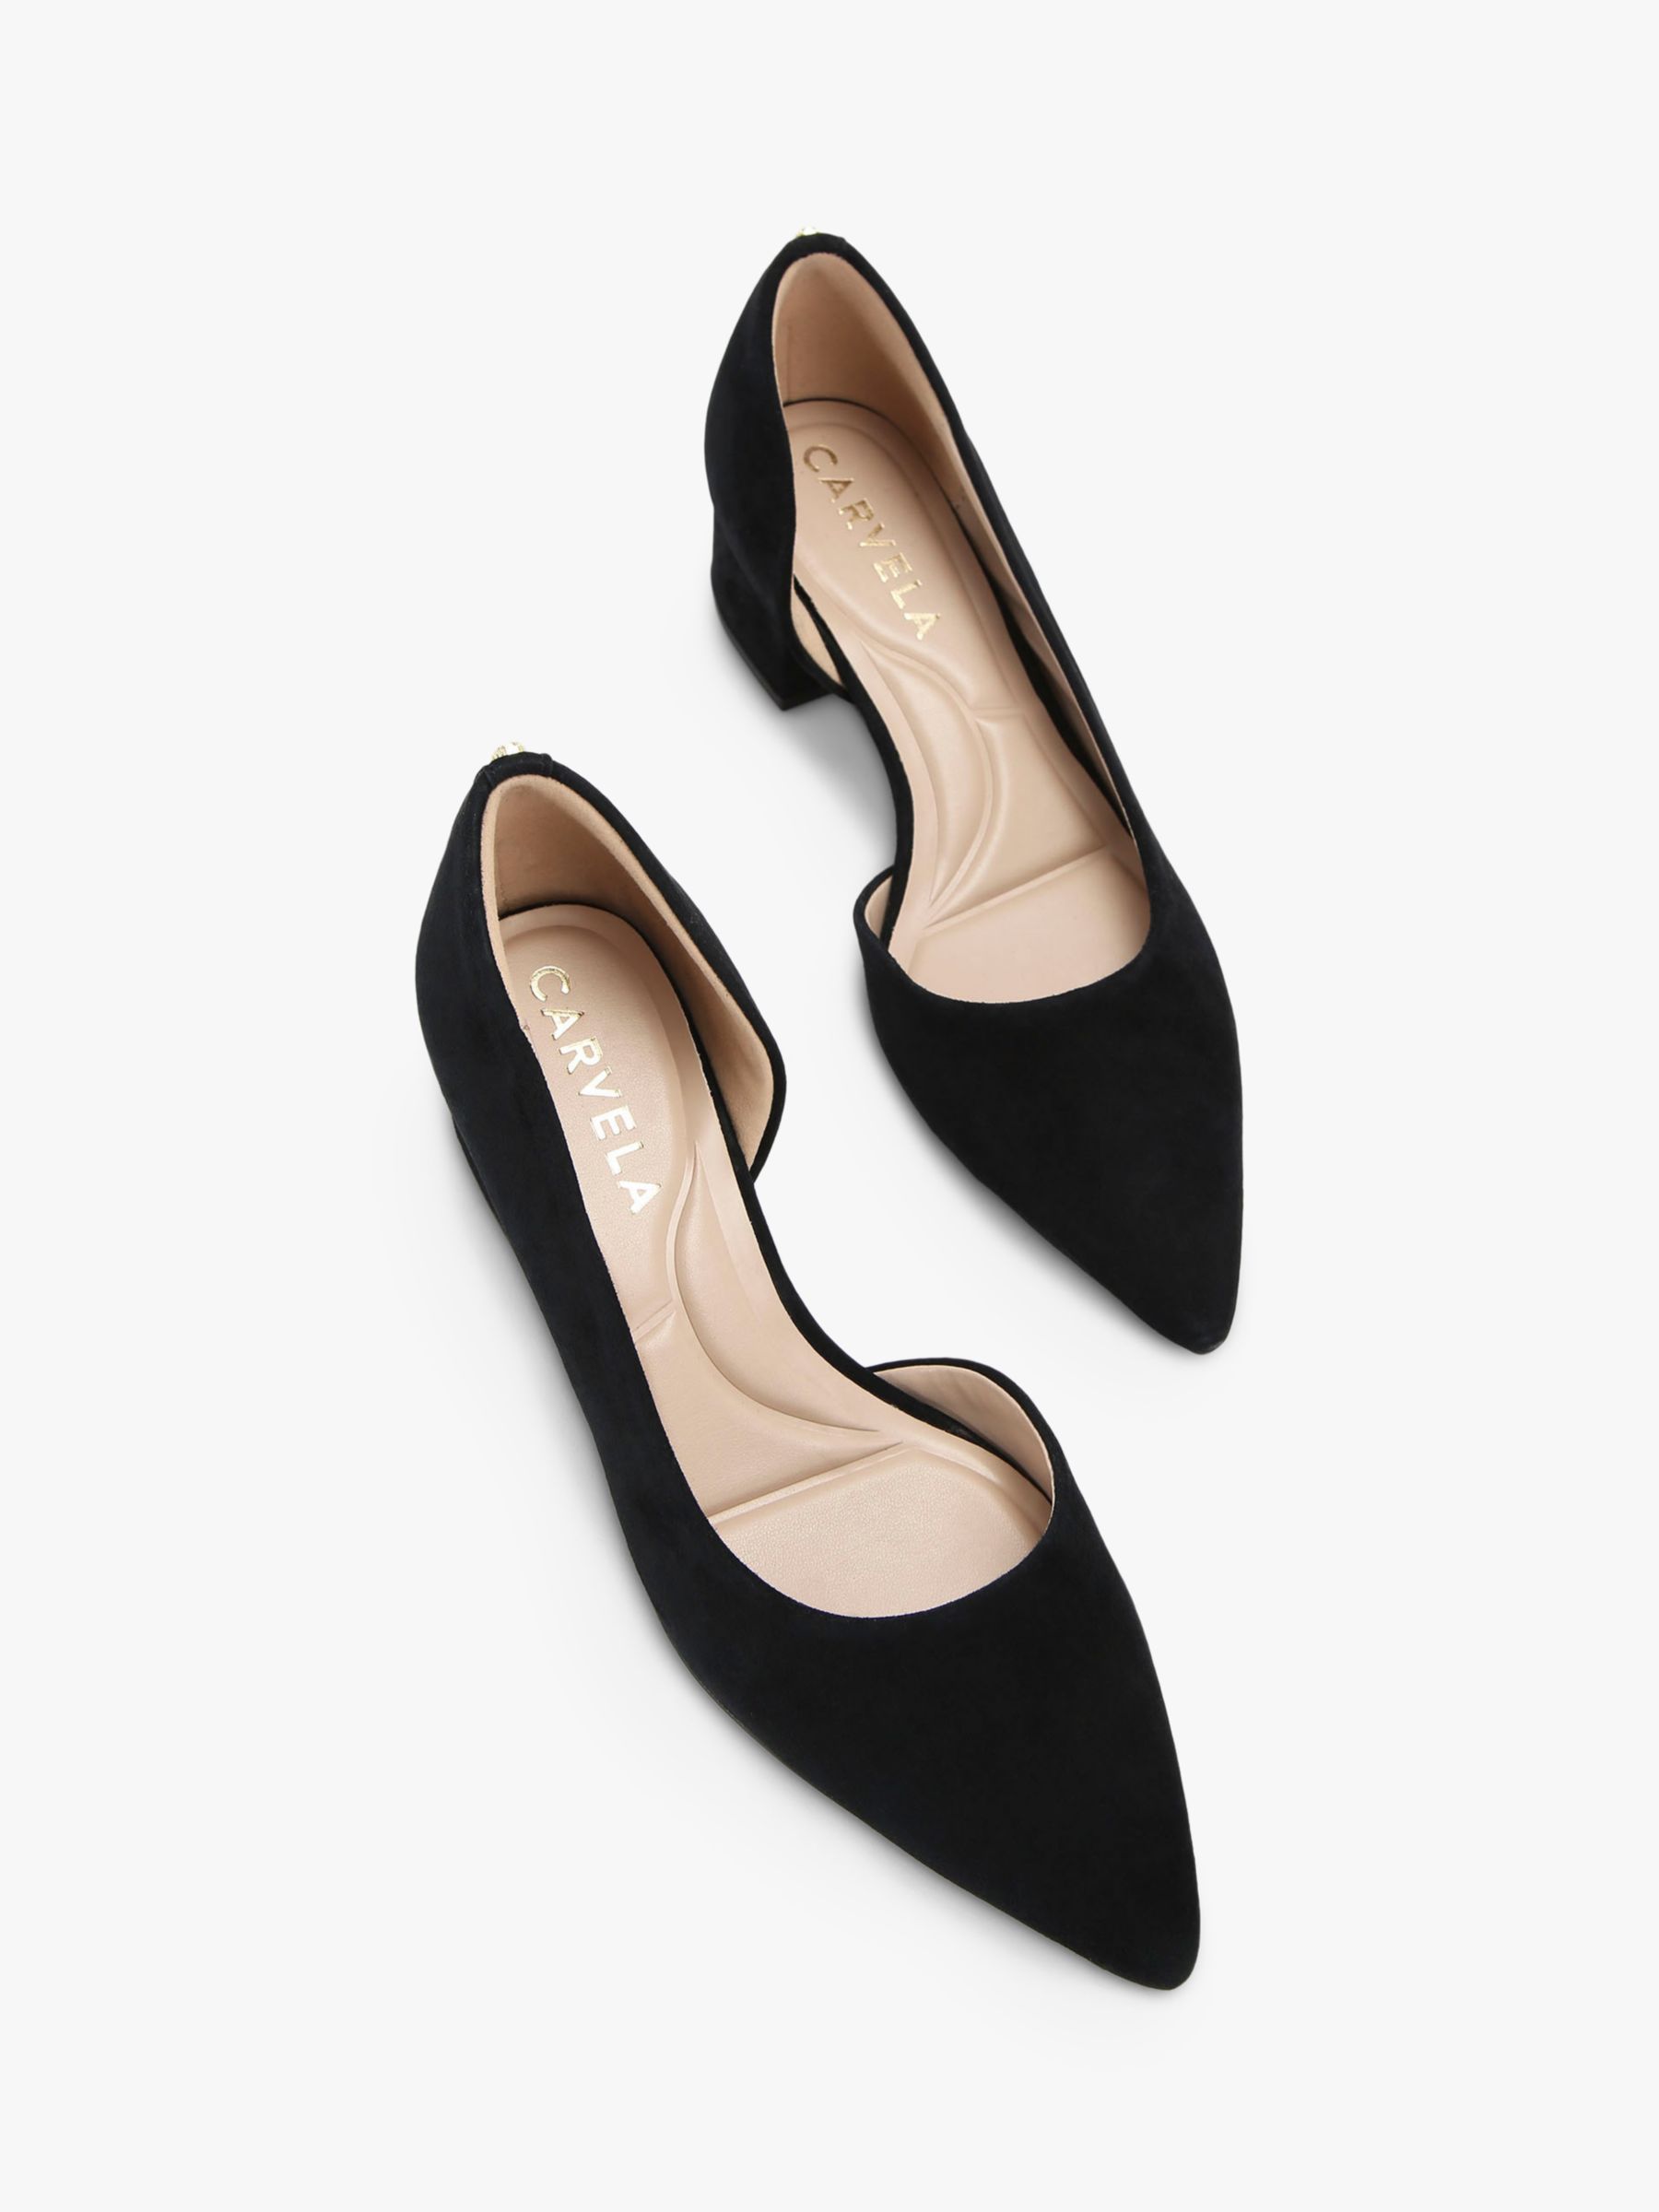 Carvela Camilla Leather Court Shoes, Black, 3